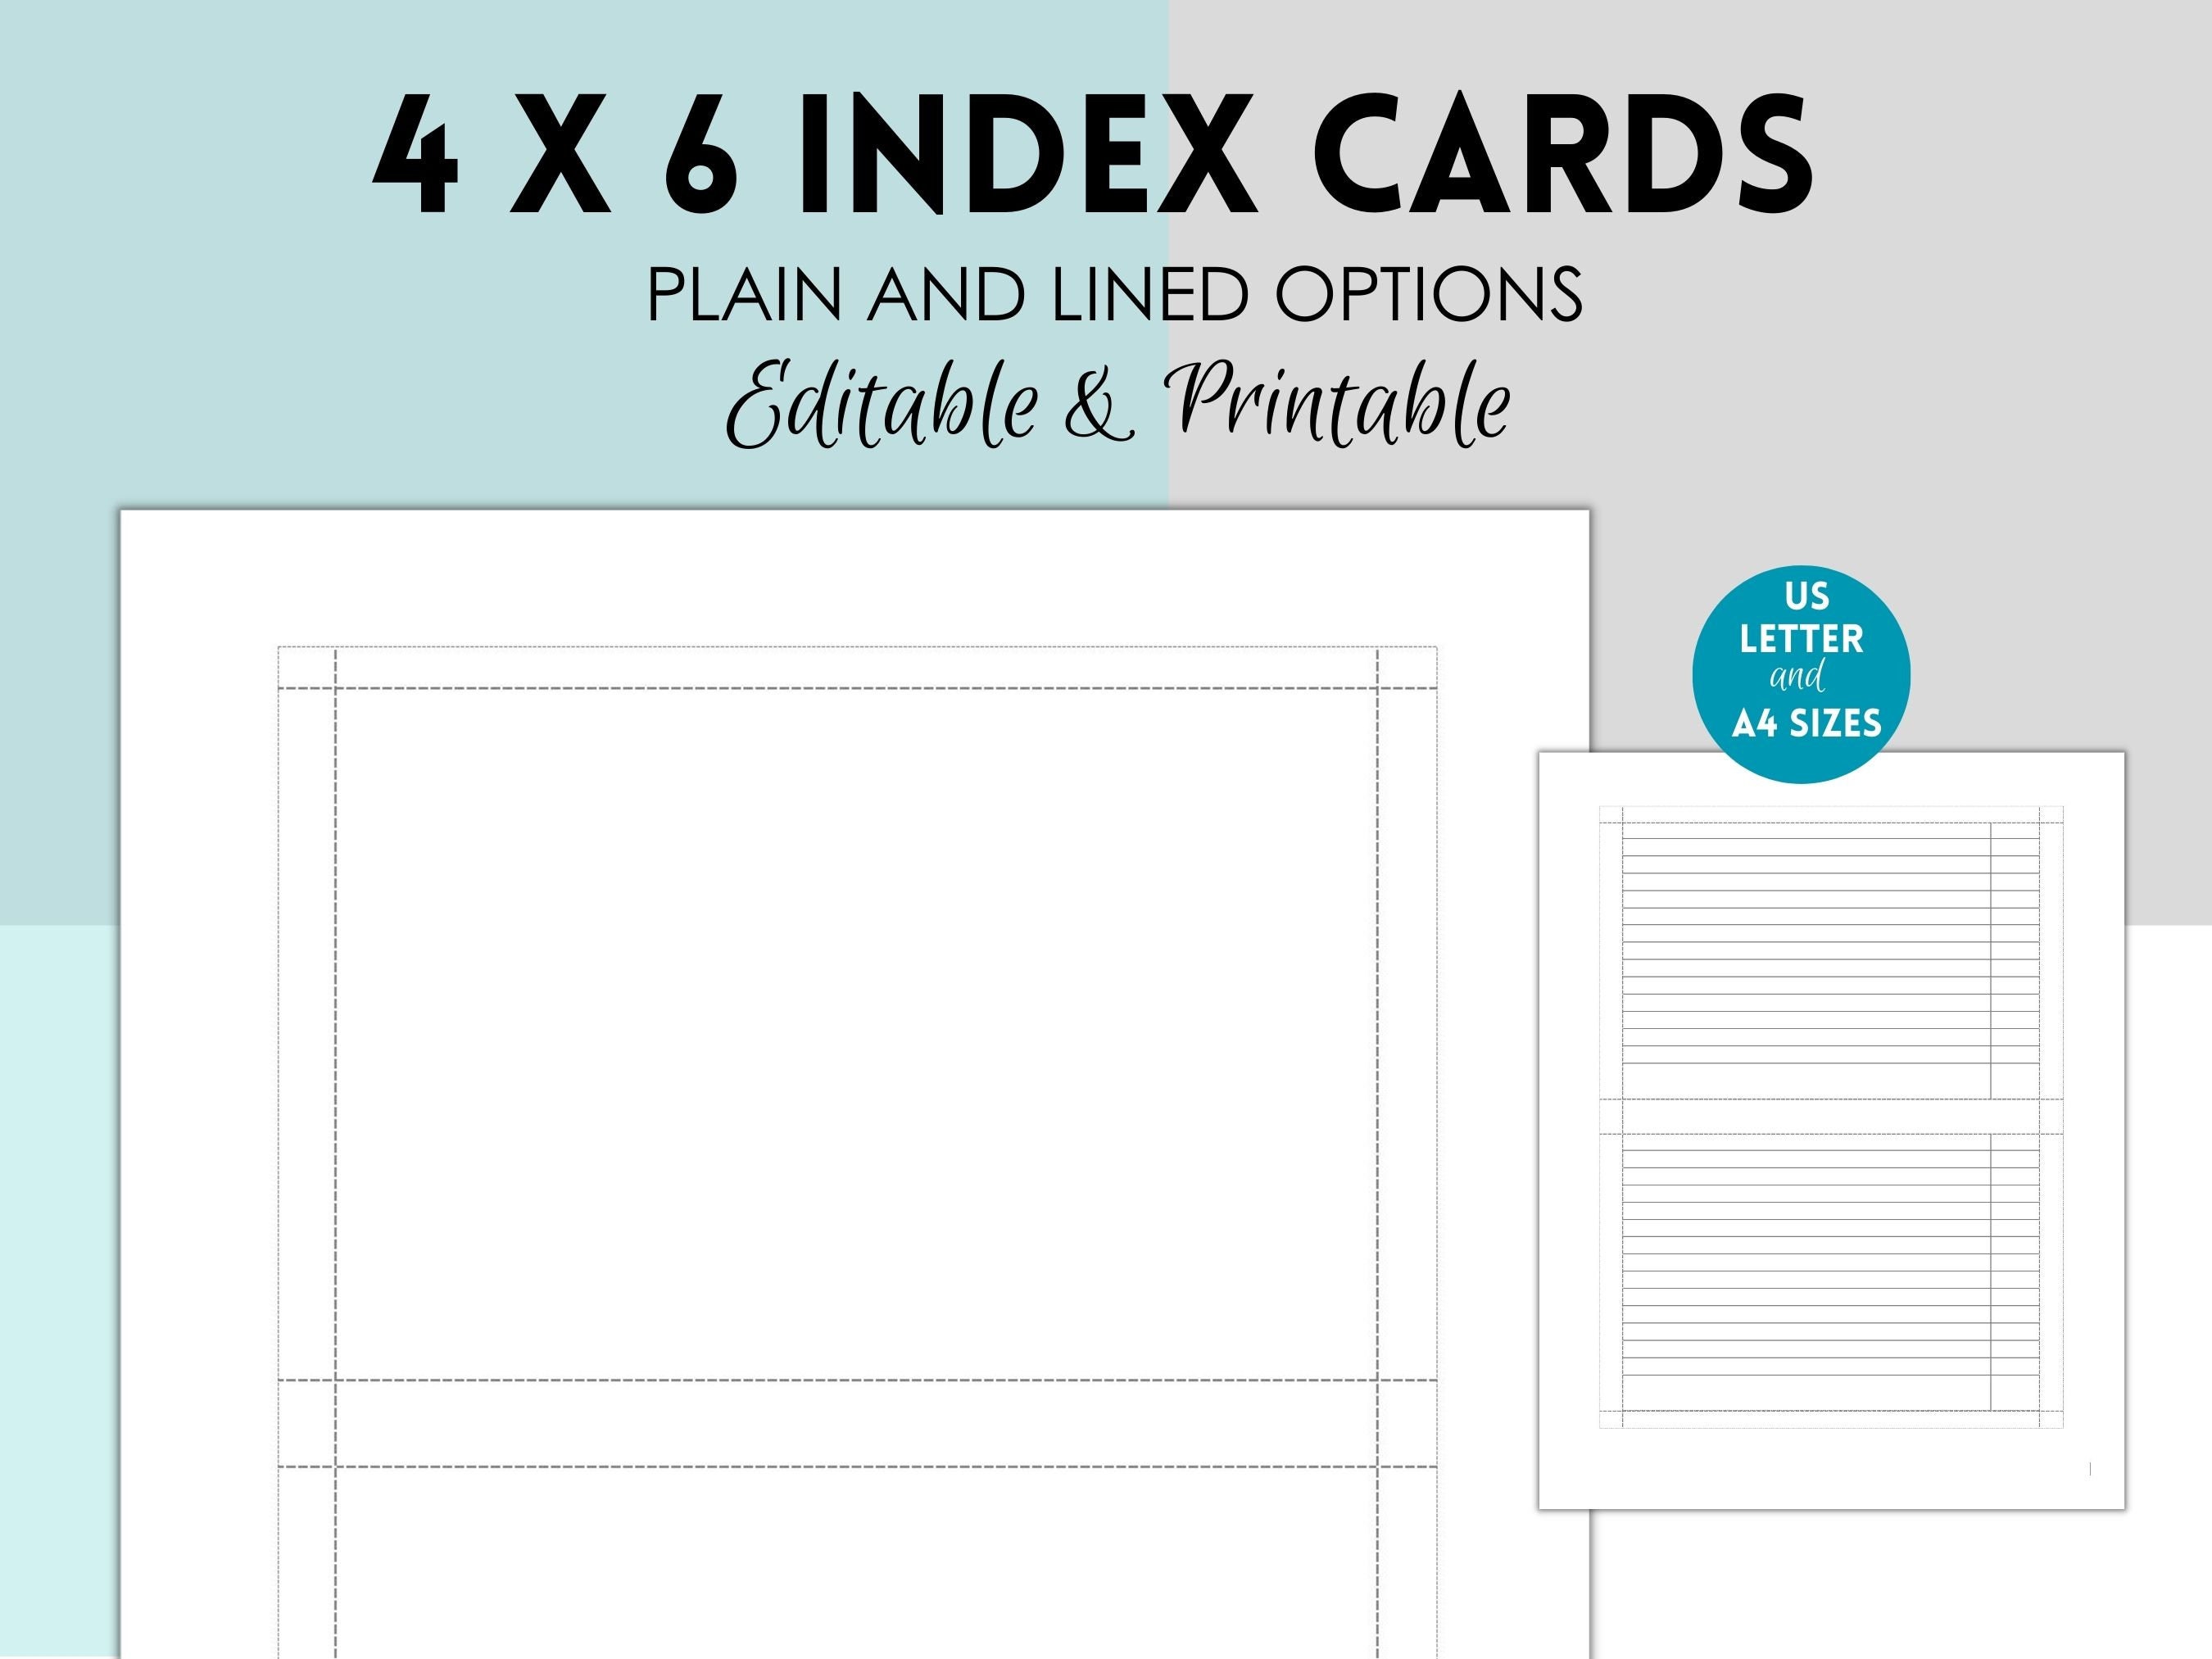 4x6 Index Card Folder Tutorial - Amanda HawkinsAmanda Hawkins